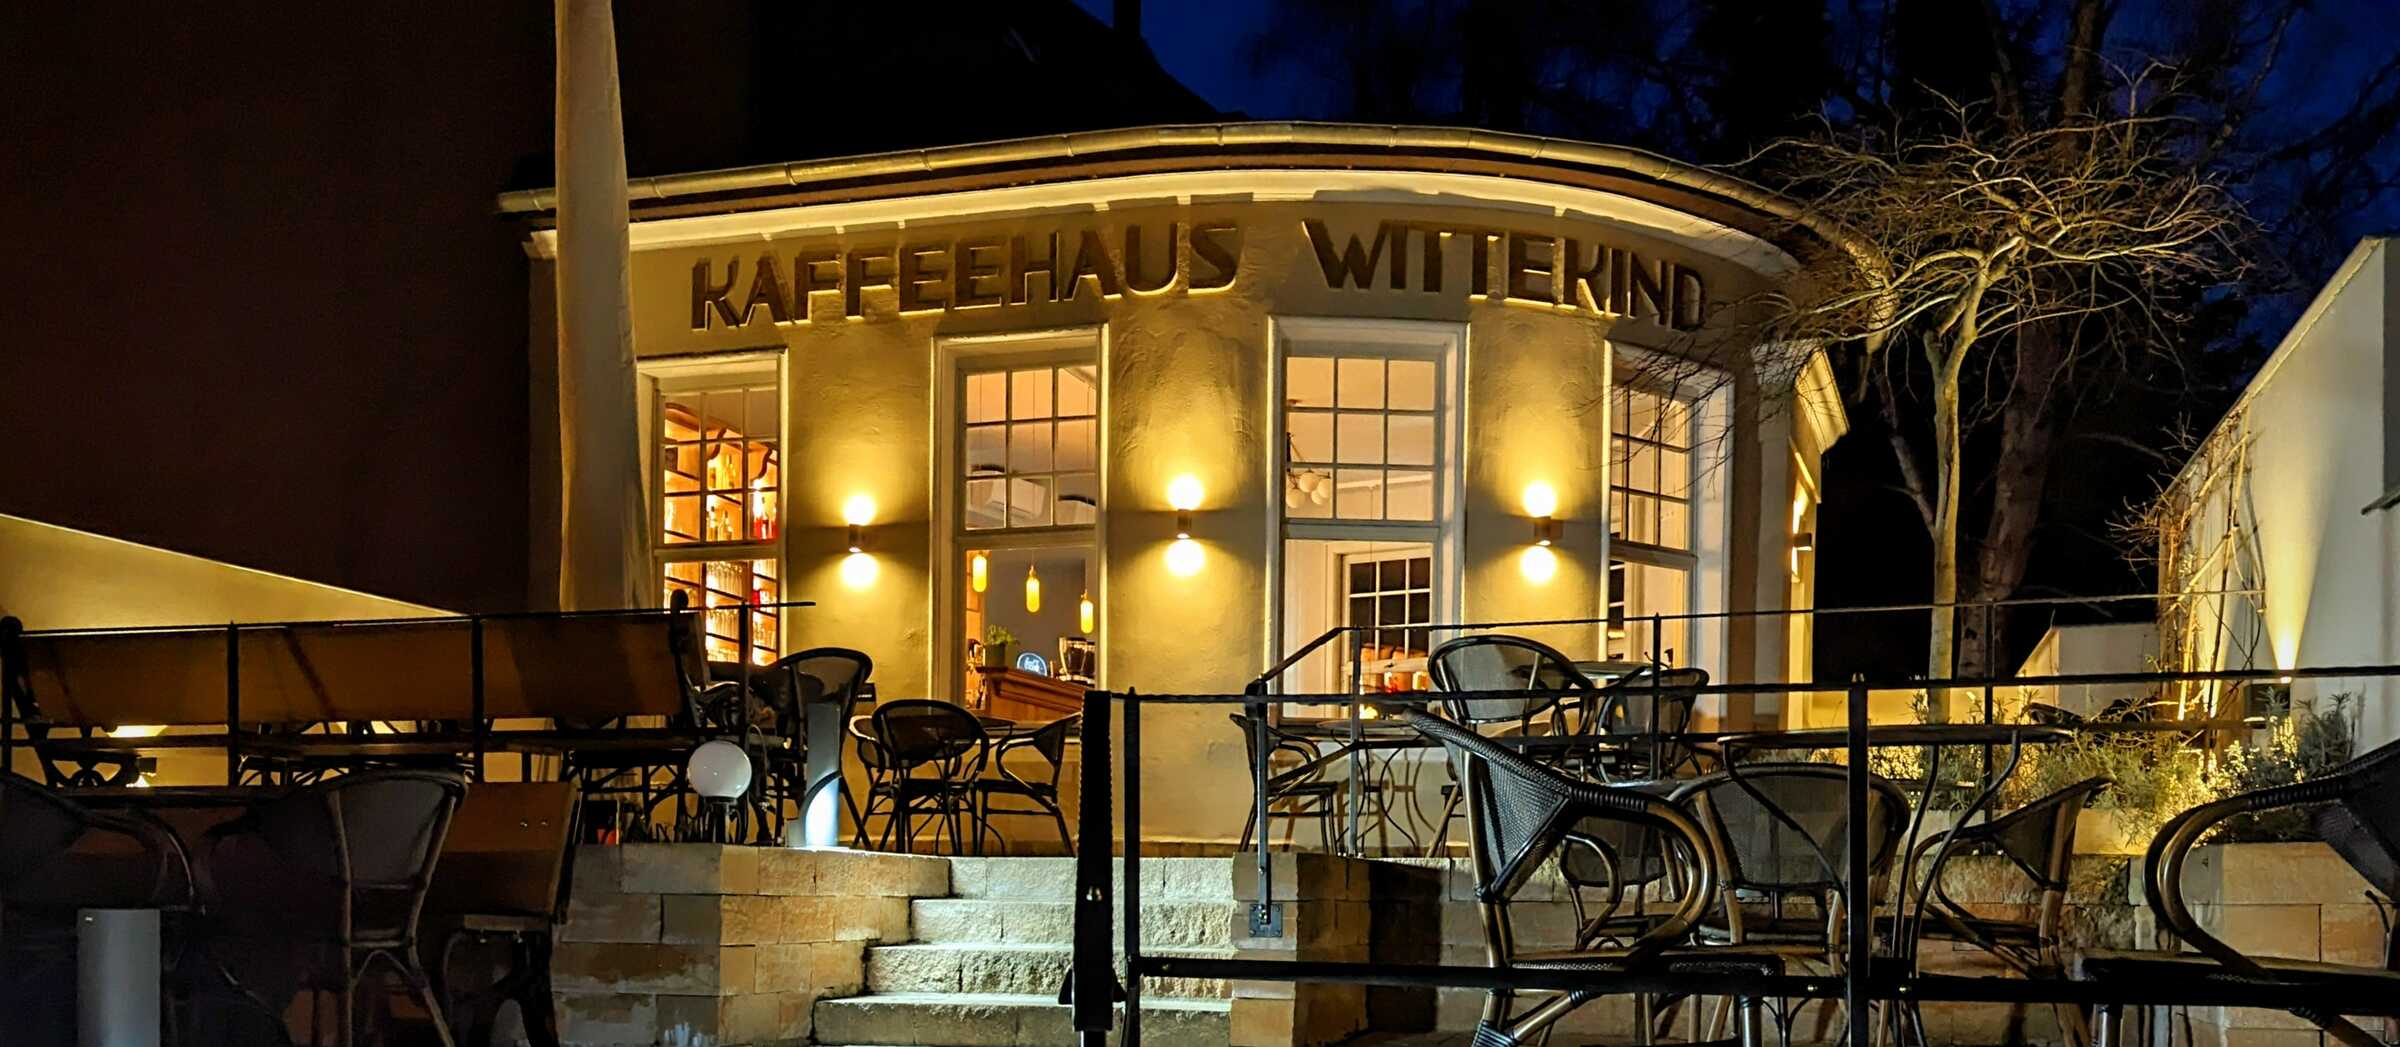 Kaffehaus Wittekind